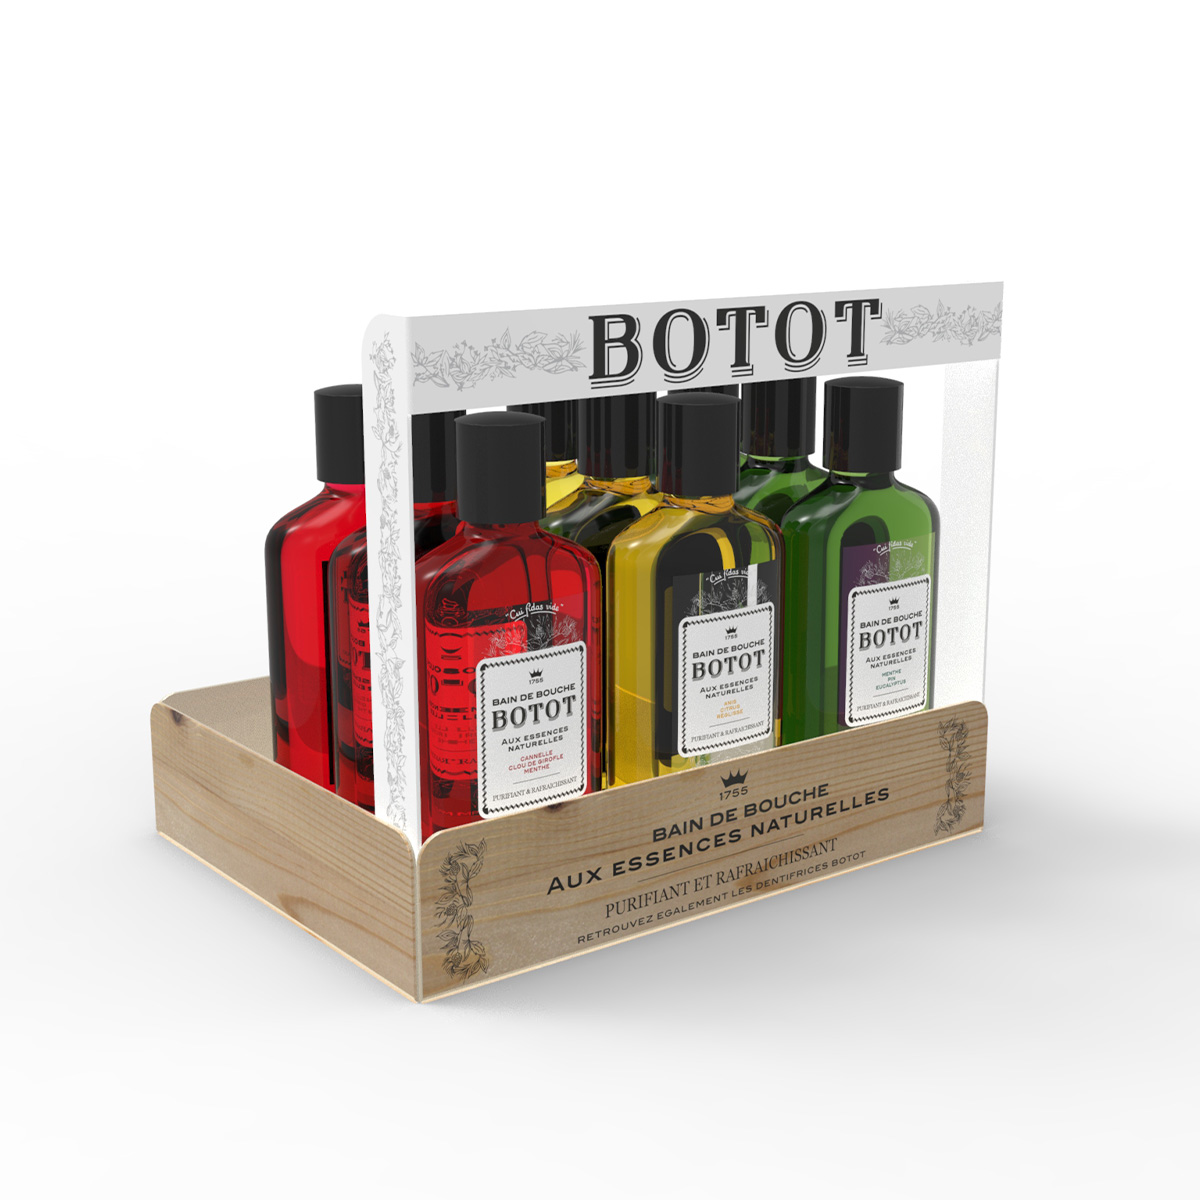 Botot - Identité Visuelle, Packaging & Merchandising